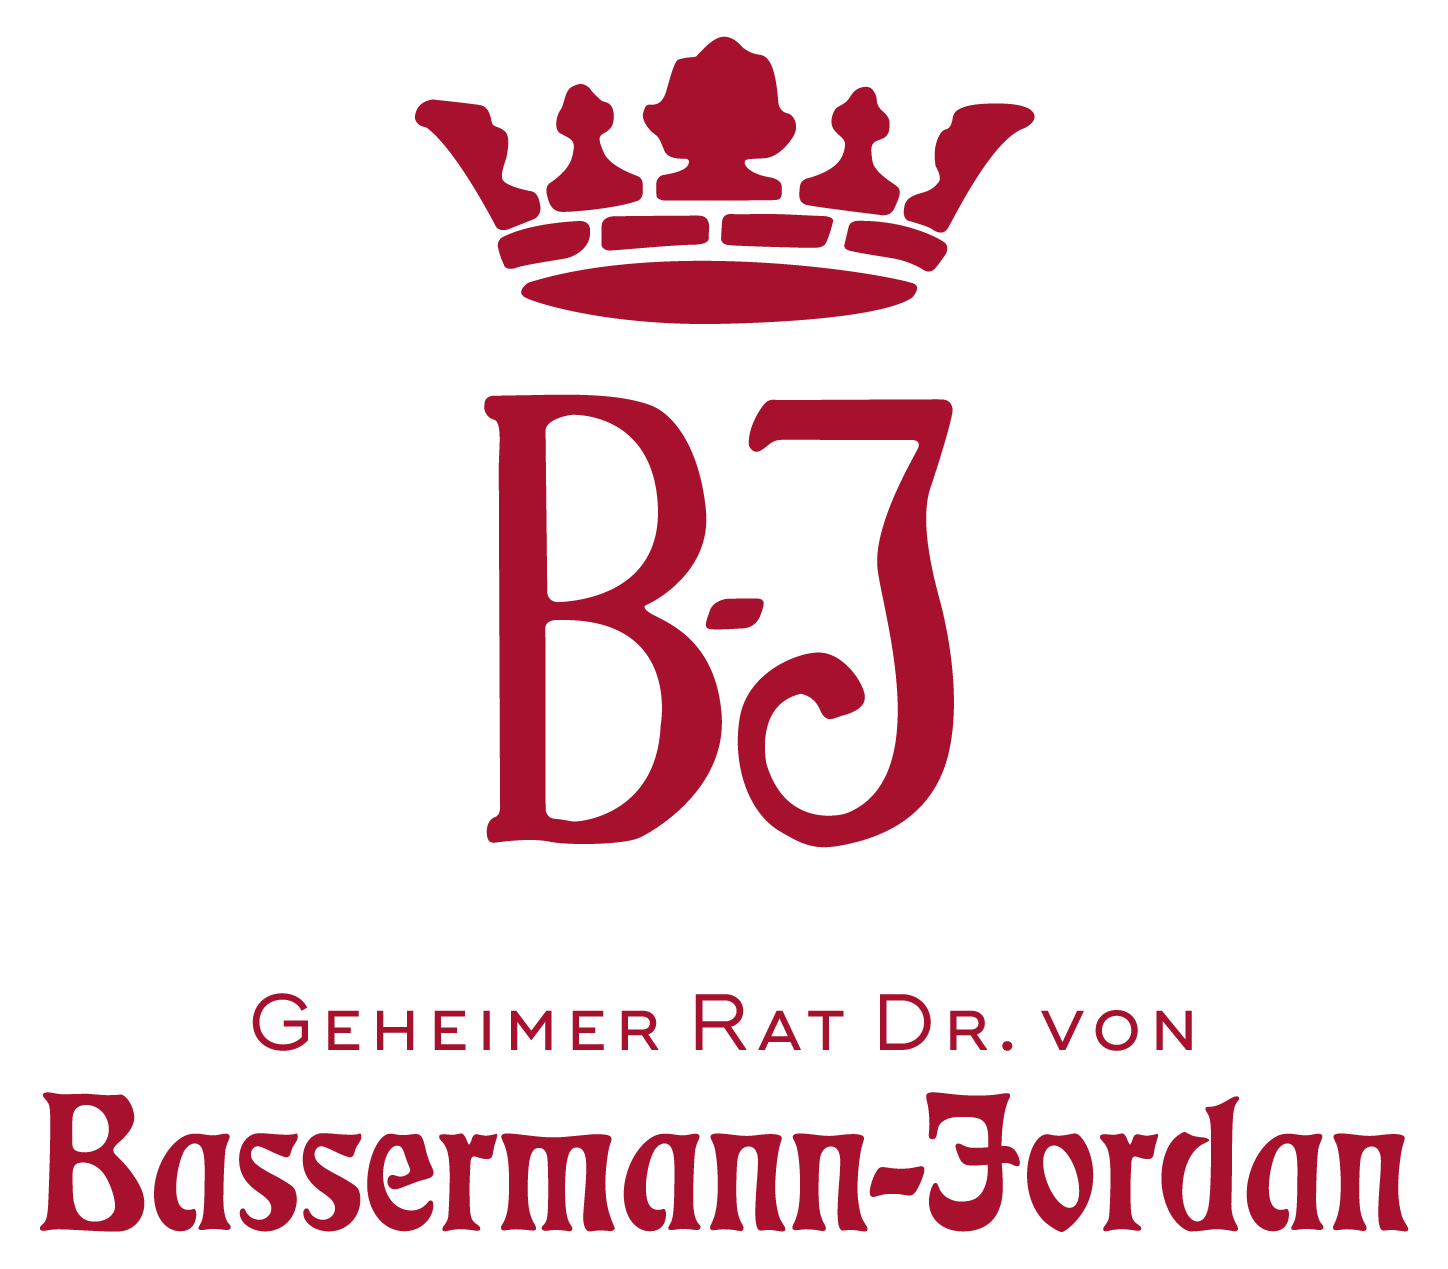 Bassermann Jordan